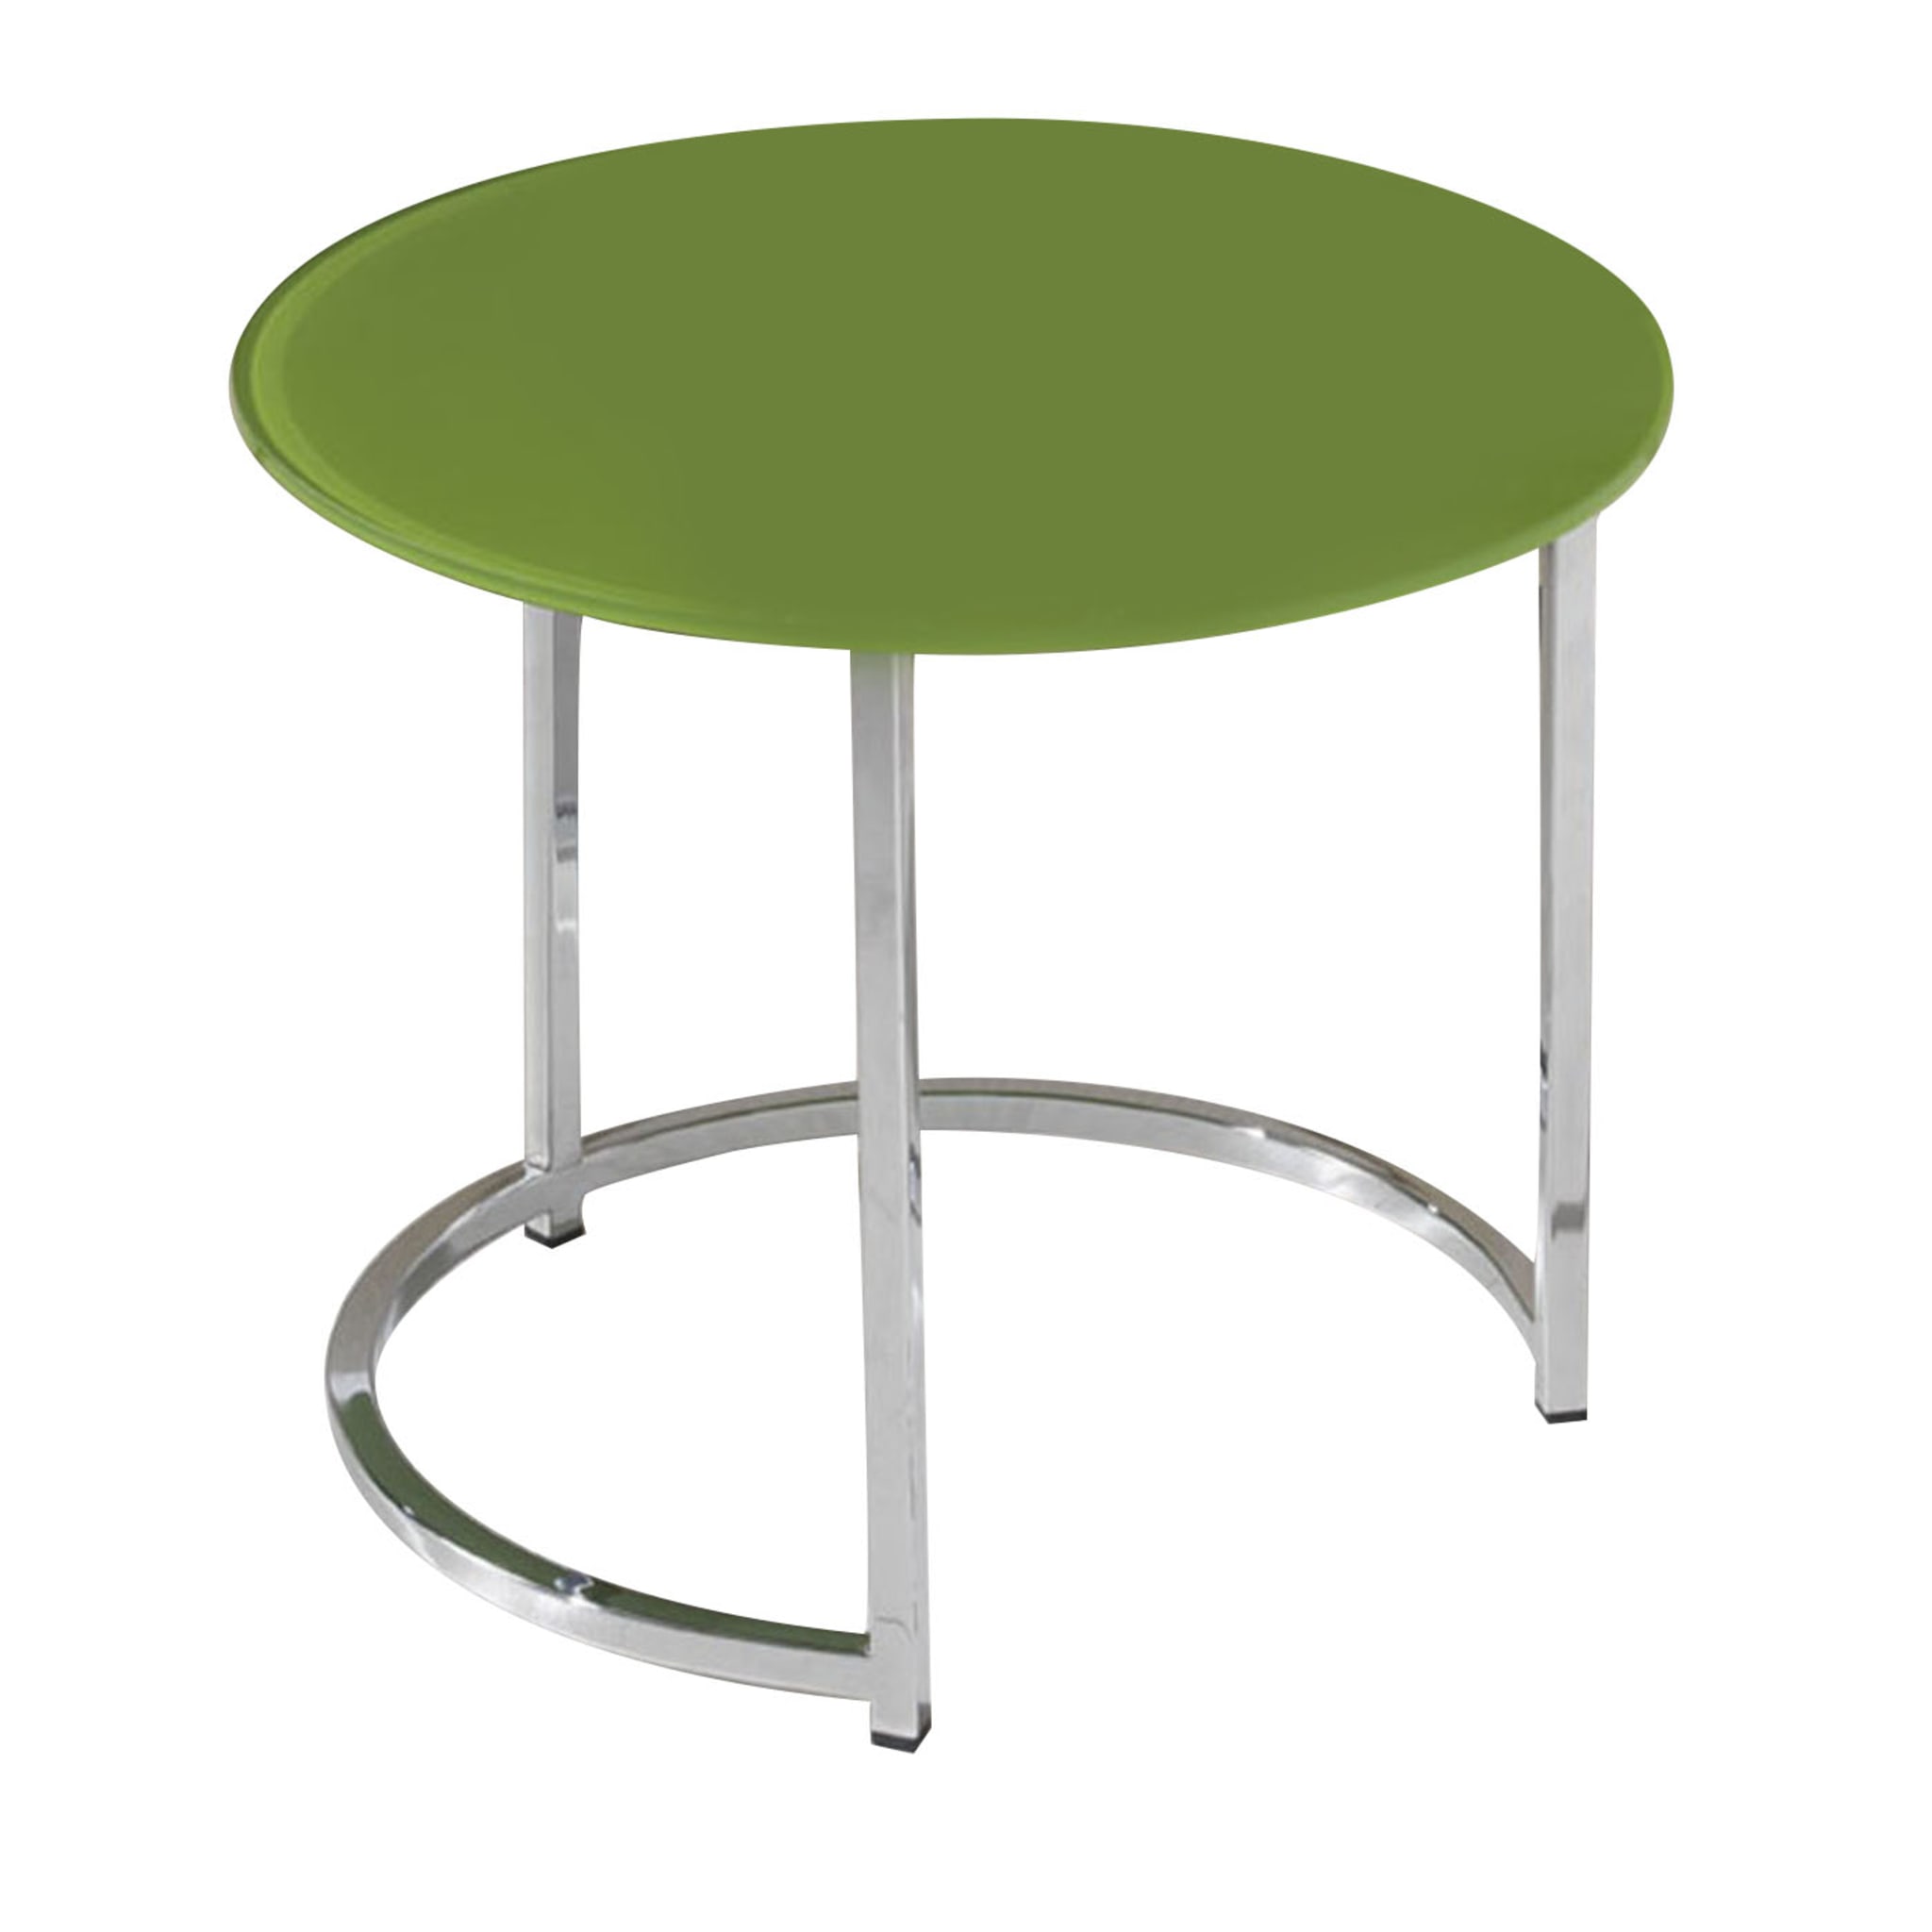 Cin Cin Green Glass Coffee Table - Main view